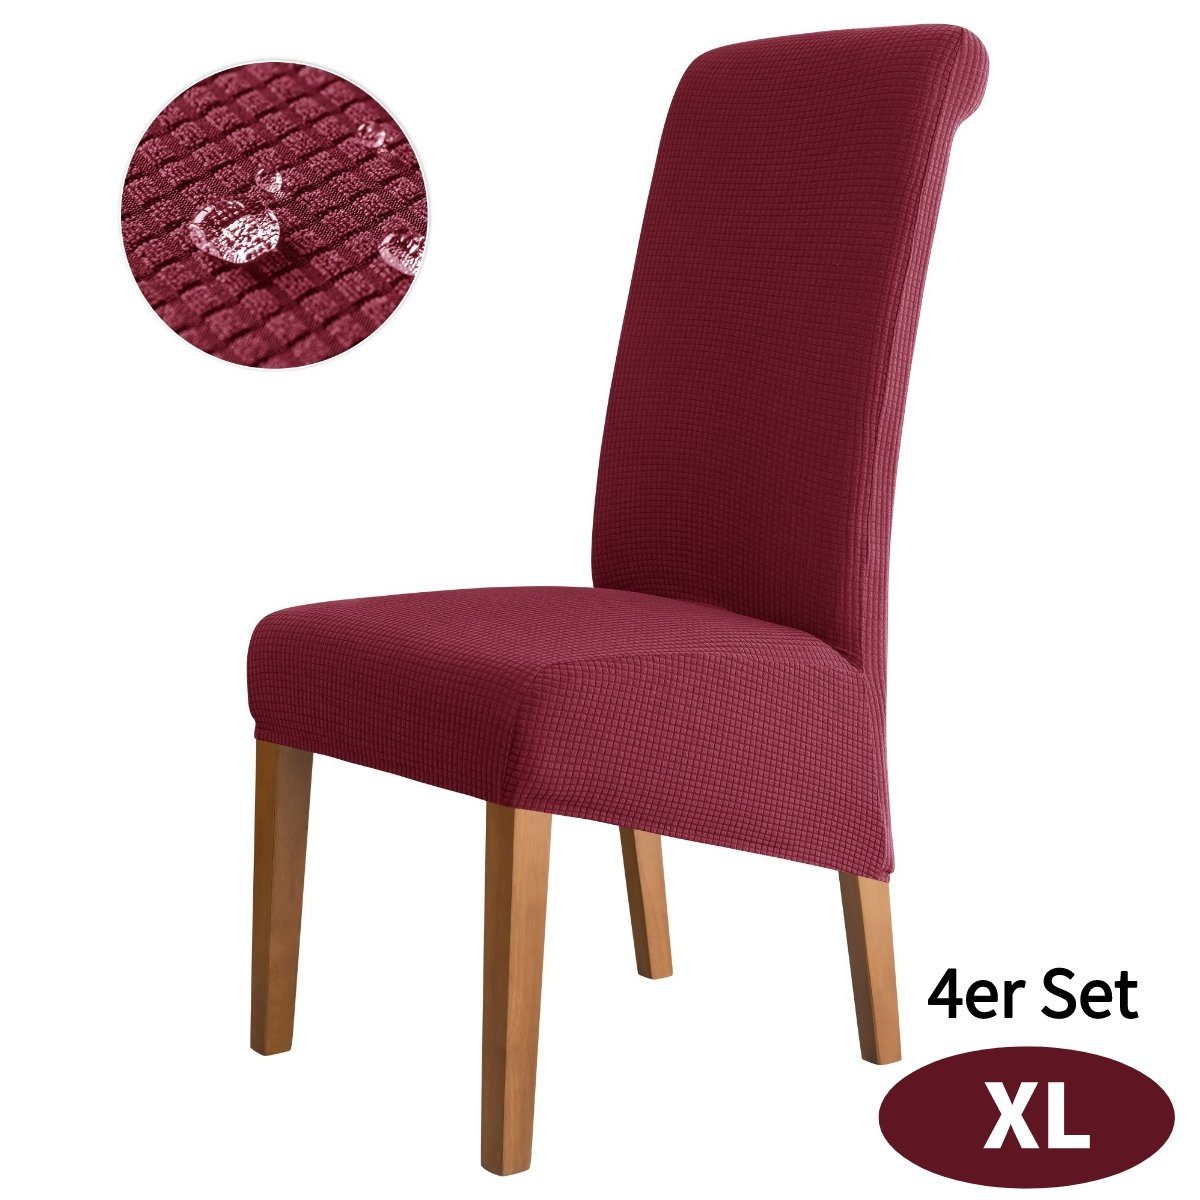 Sitzflächenhusse Universal Stuhlbezug Stretch Stuhl hussen Hochwertiger Stretchstoff, 7Magic, Stretch-Stuhlhussen, abnehmbar, waschbar,4er-set Rot|XL